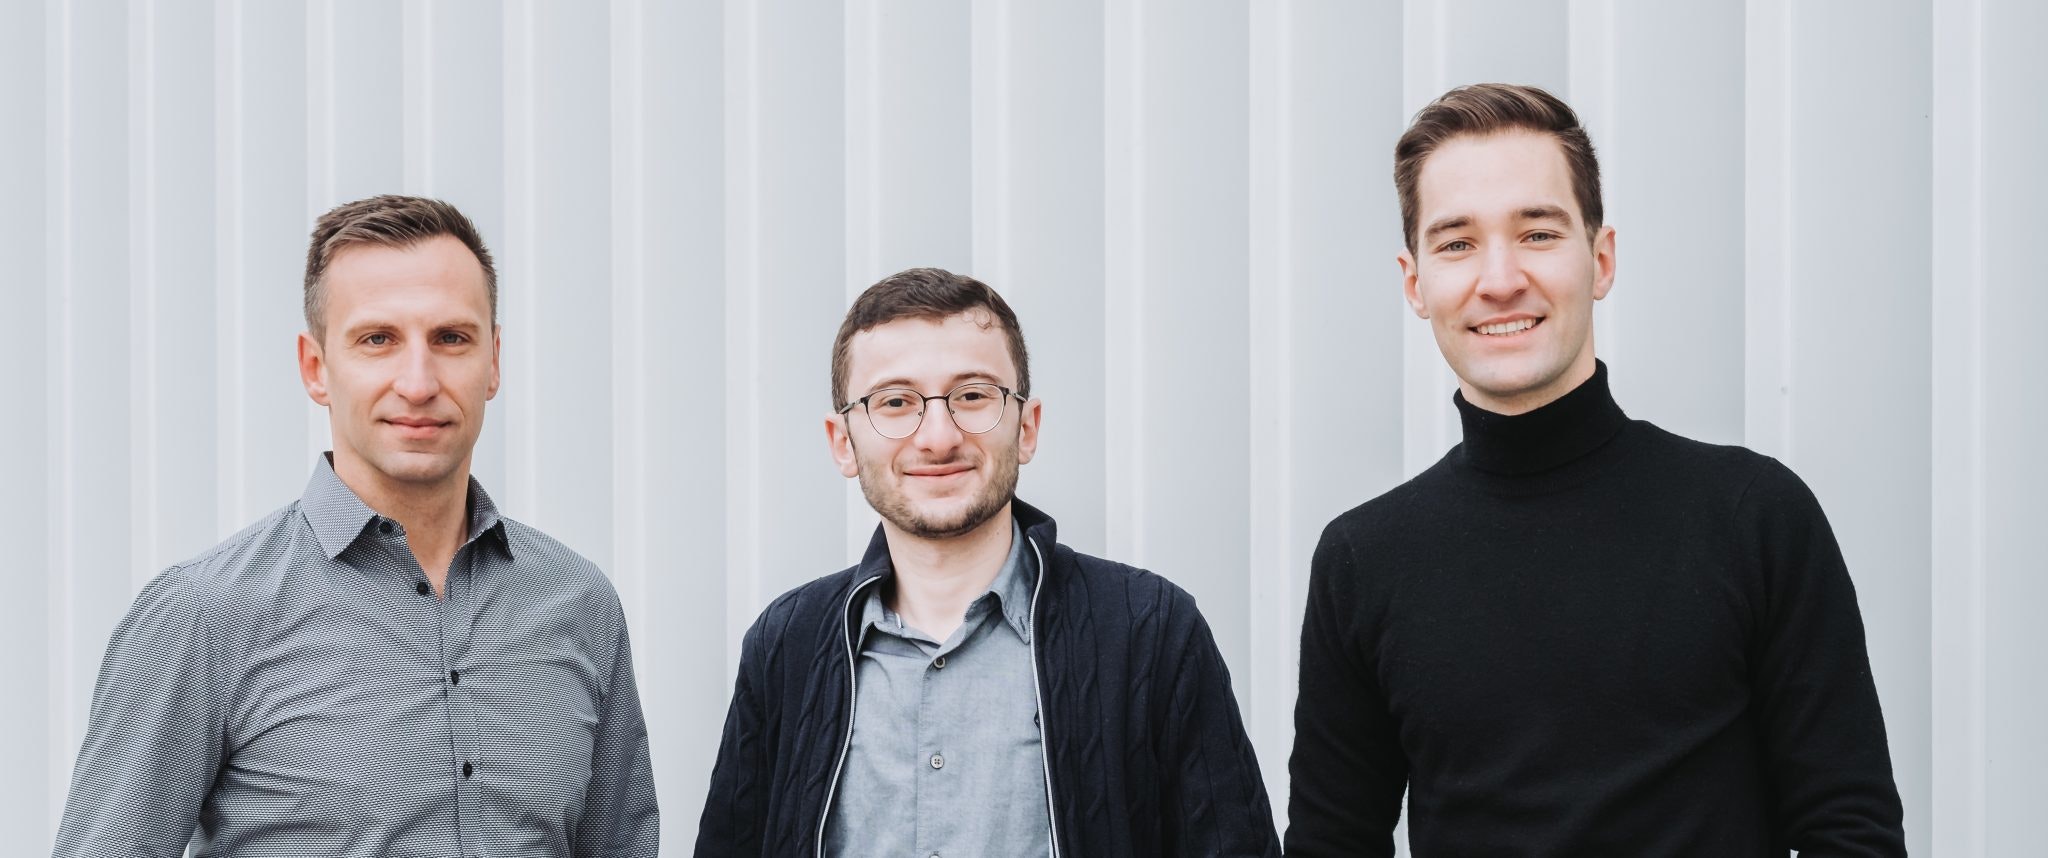 WorkMotion founders Carsten Lebtig, Karim Zaghloul, and Felix Steffens.